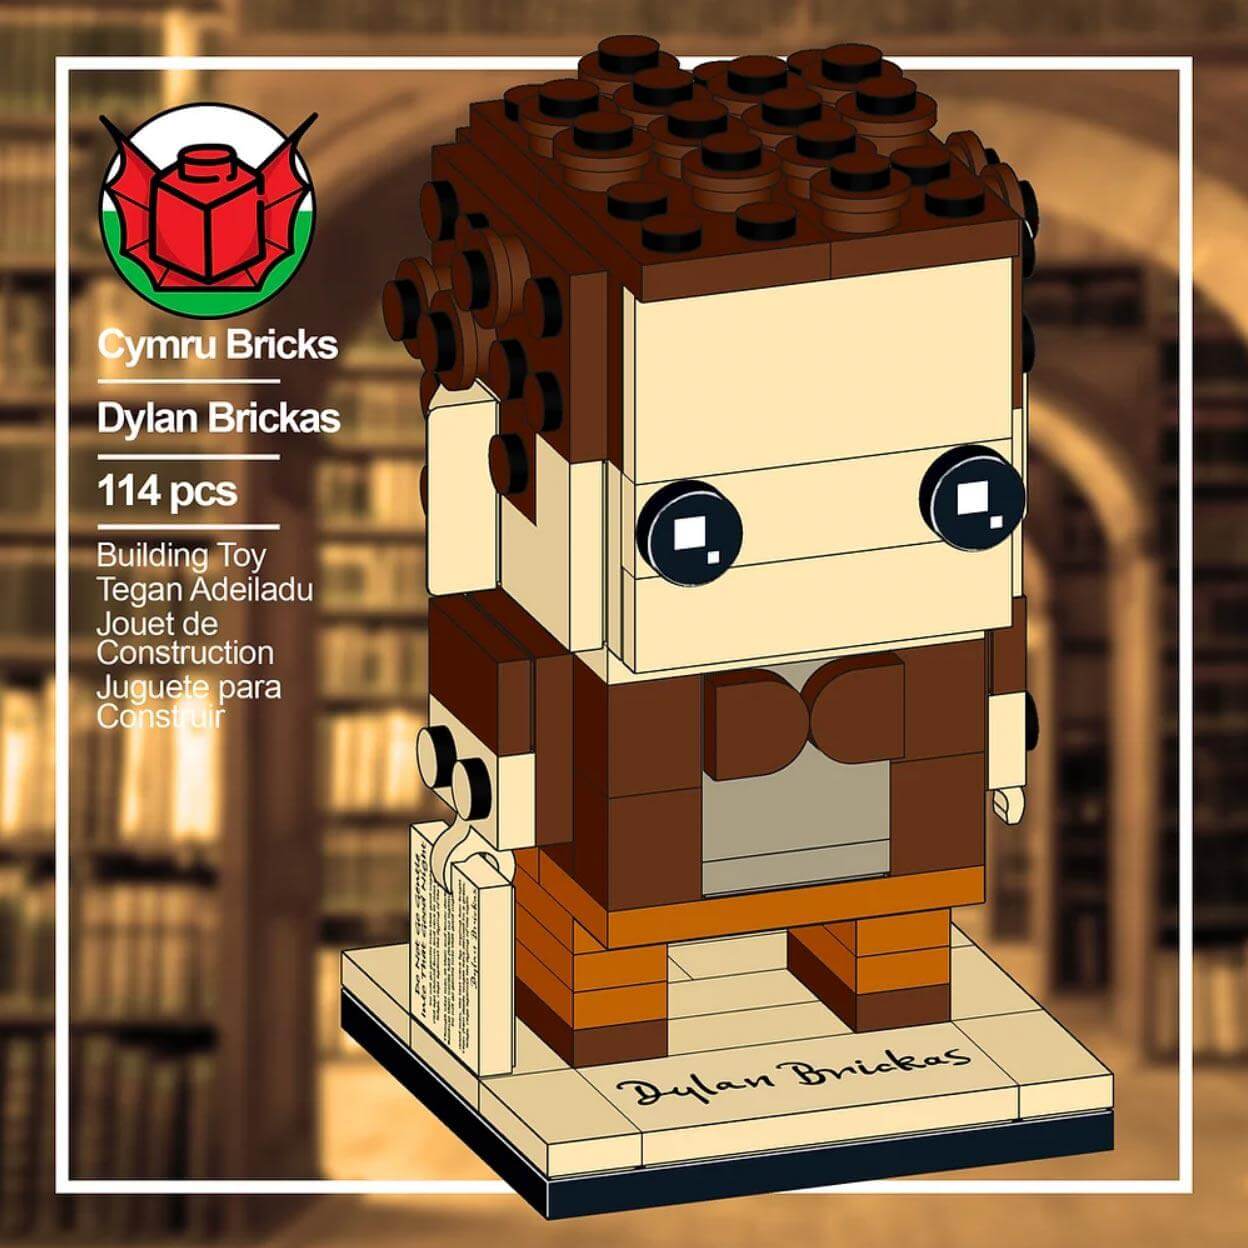 Brick Set - Cymru Bricks - Build Your Own: Dylan Thomas / Brickas